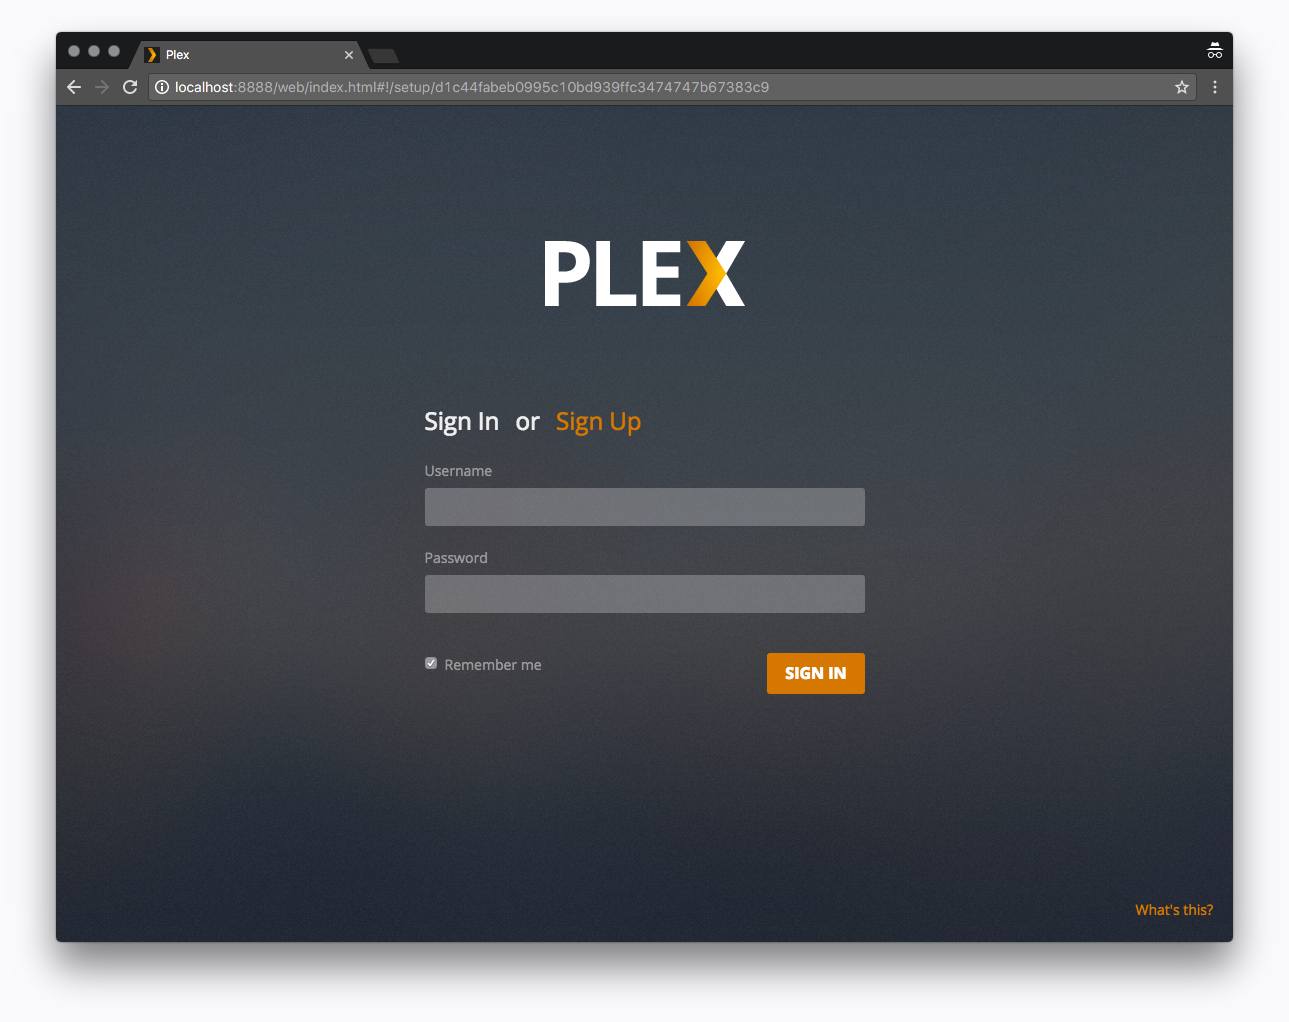 Plex web interface.